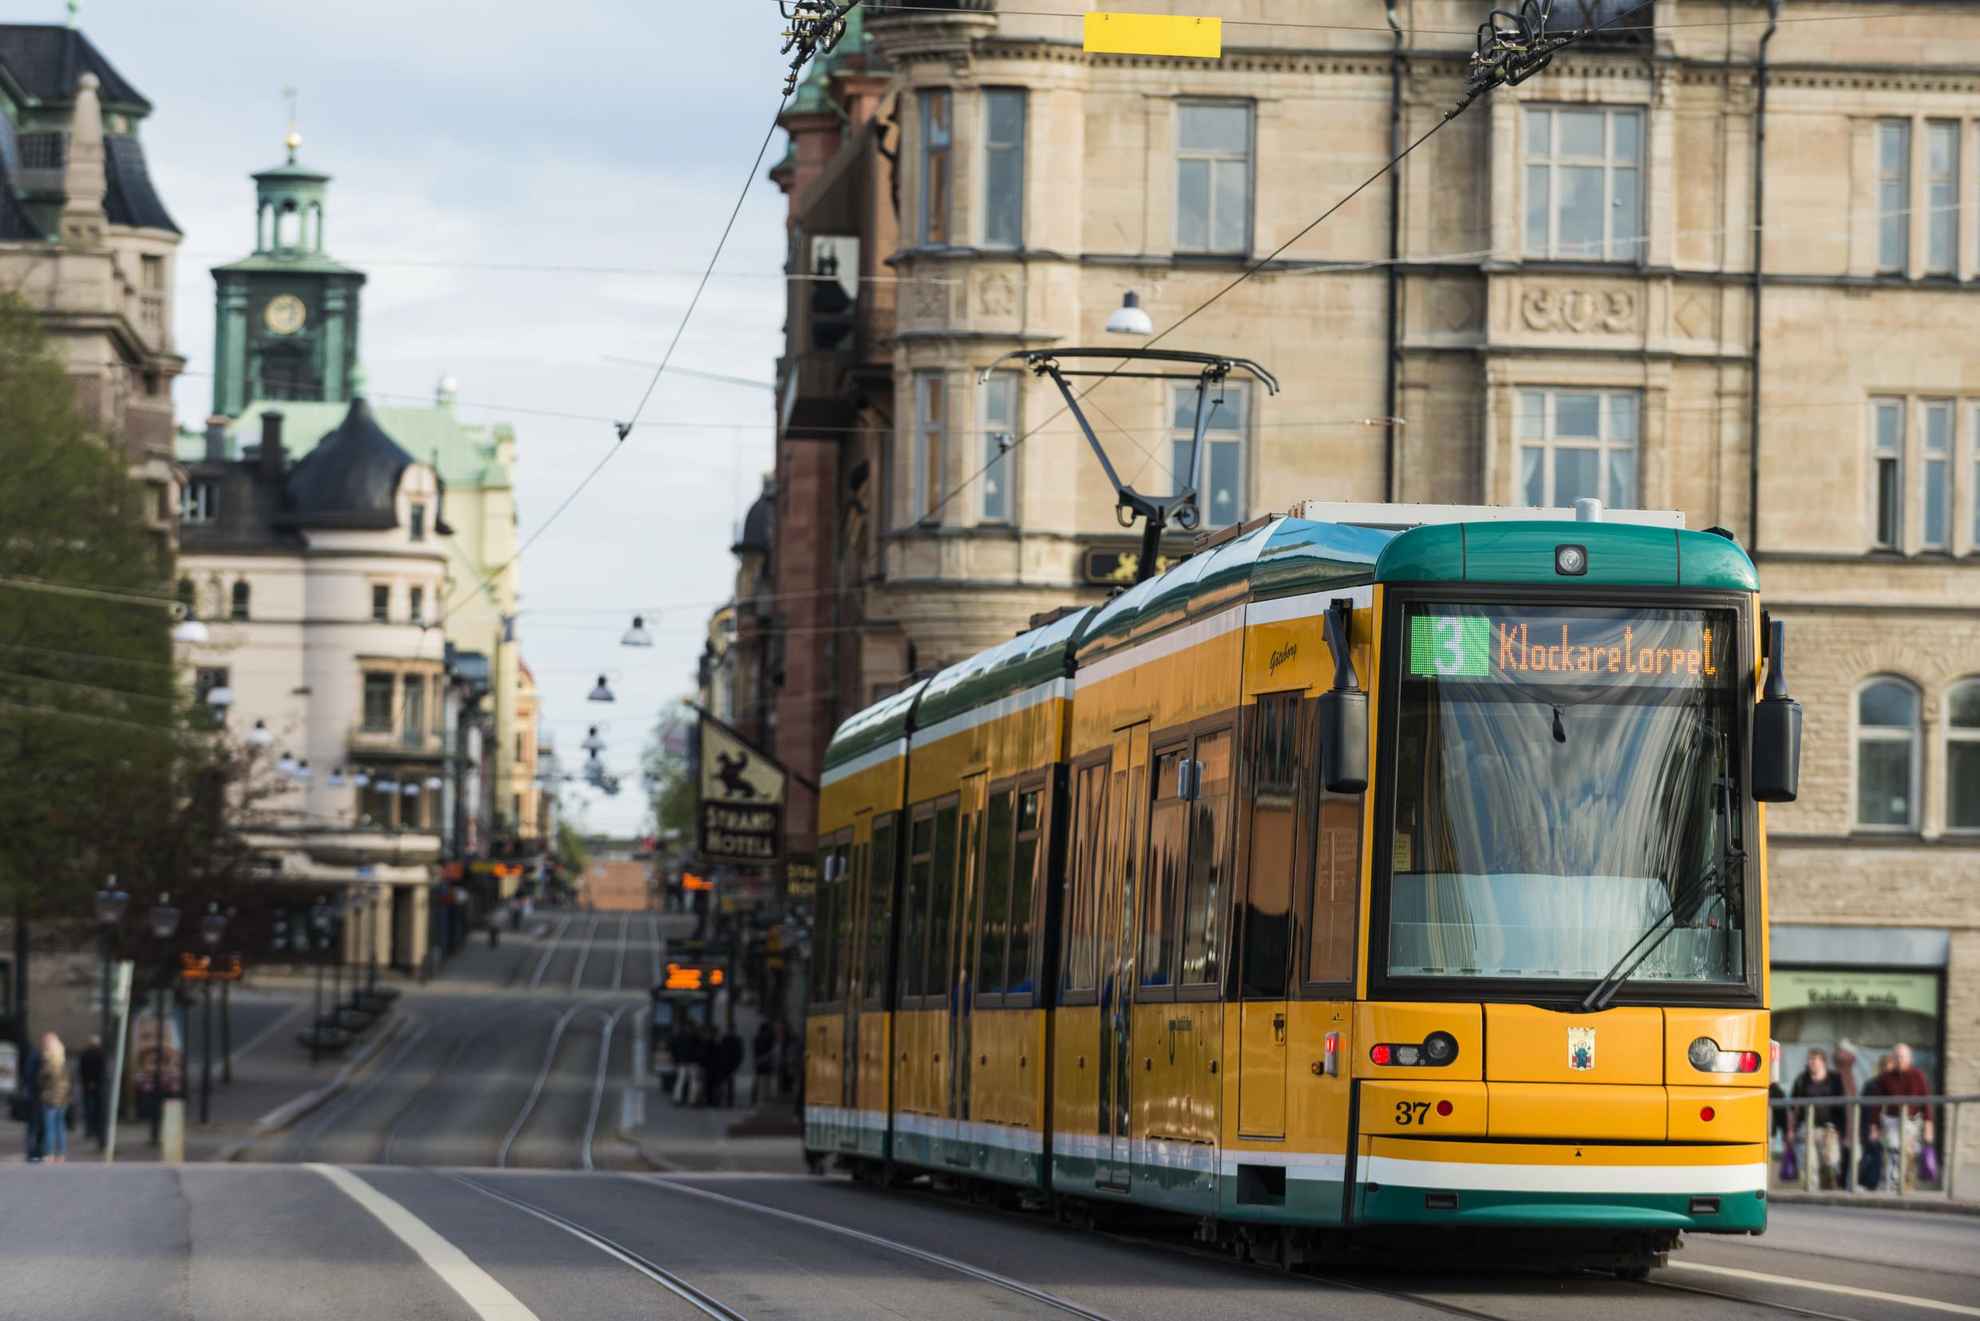 A city tram